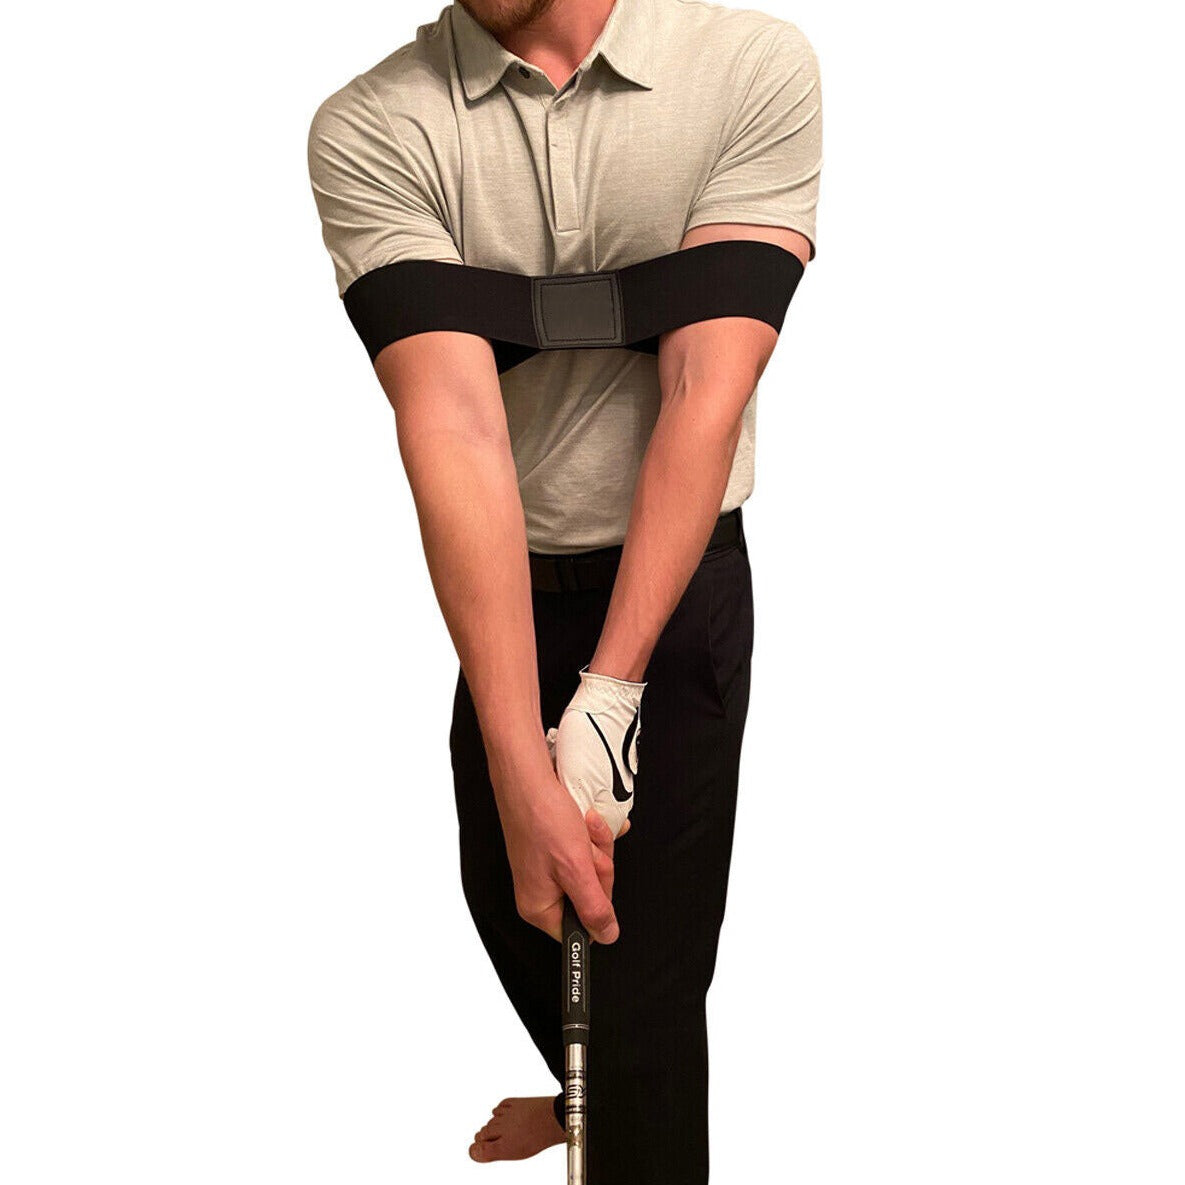 Golf Swing Trainer Aid Arm Band